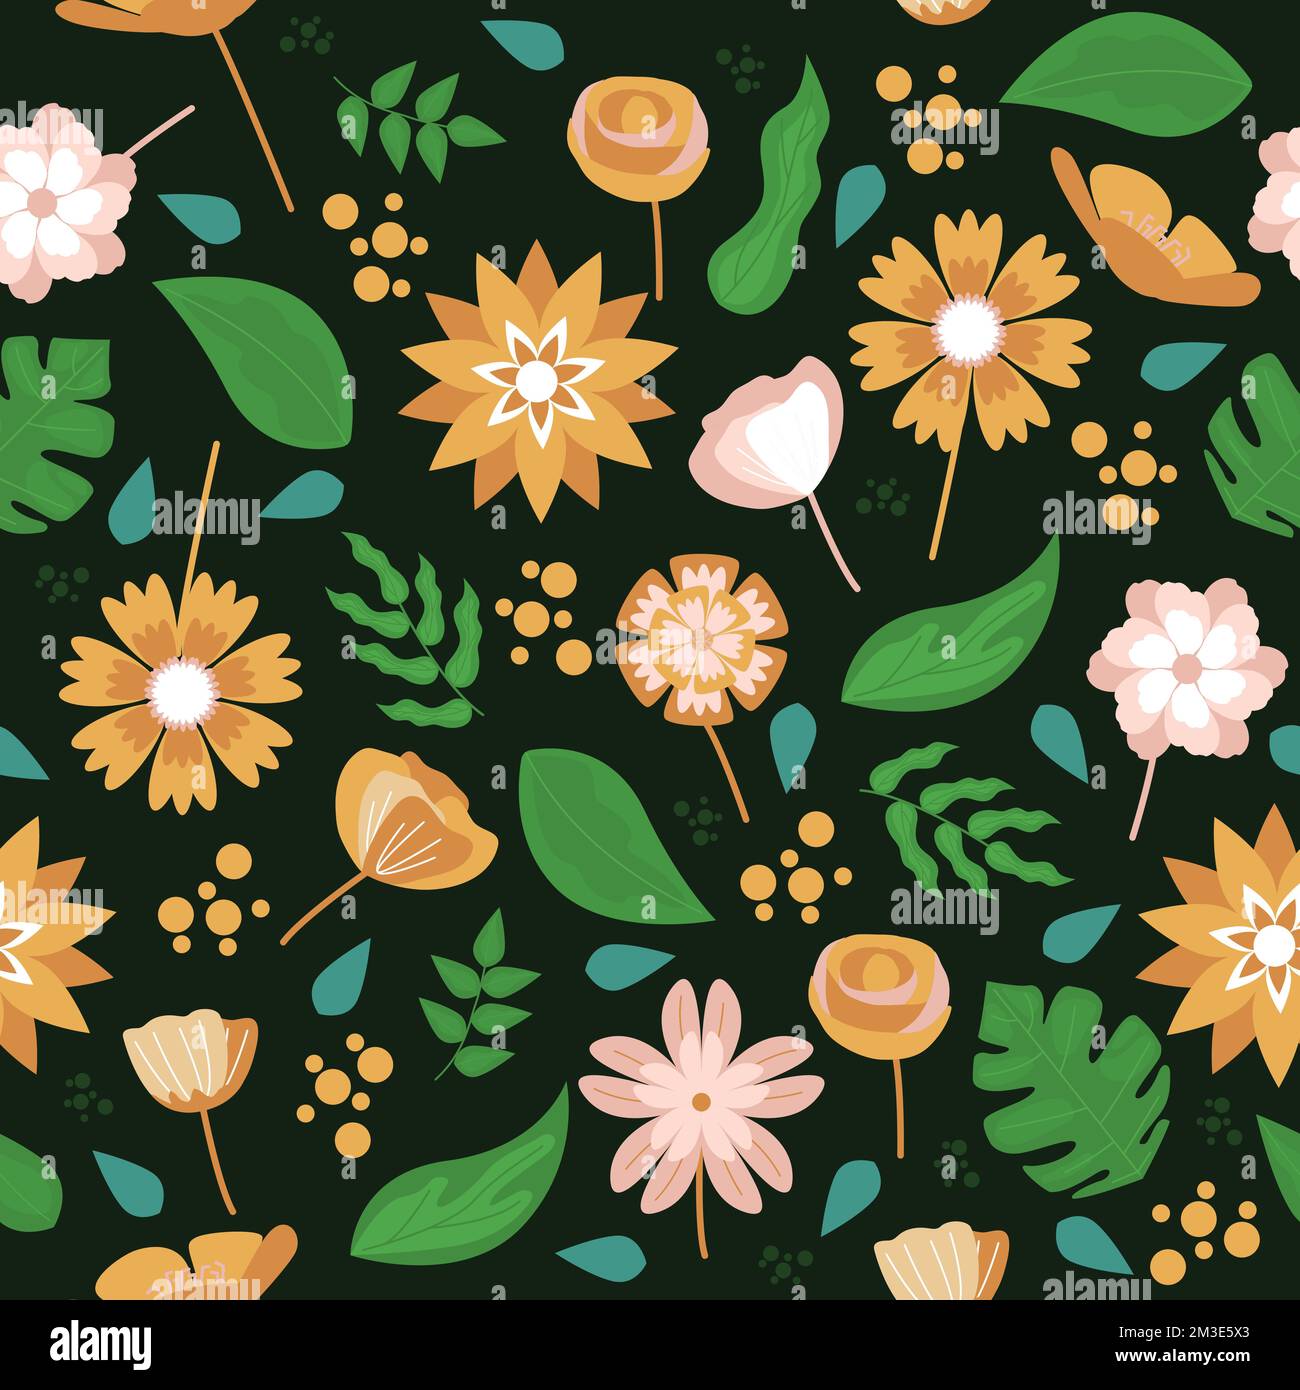 Floral Flower Nature Dark Background Seamless Pattern Wallpaper Stock Vector